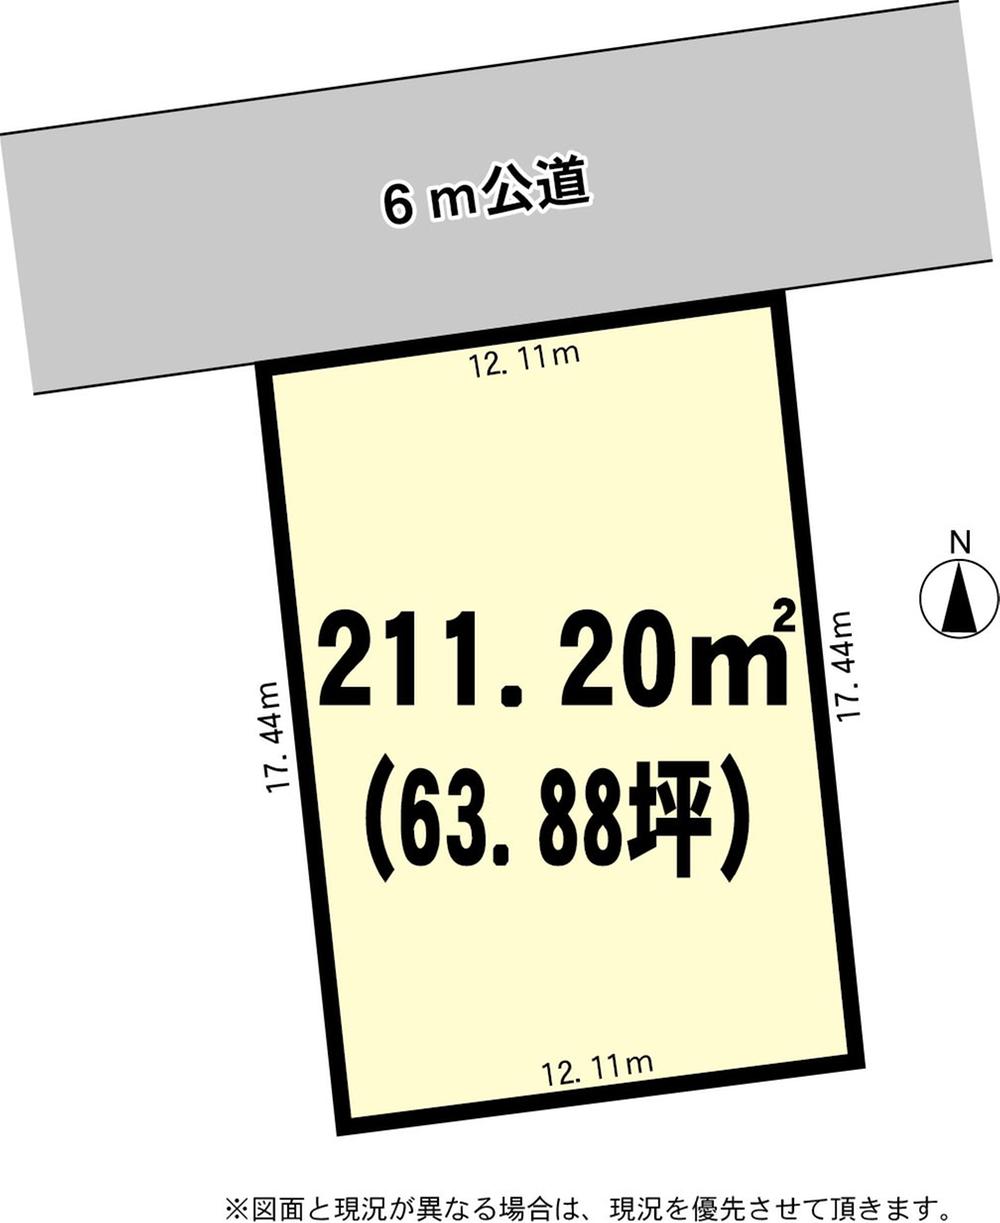 Compartment figure. Land price 14.8 million yen, Land area 211.2 sq m